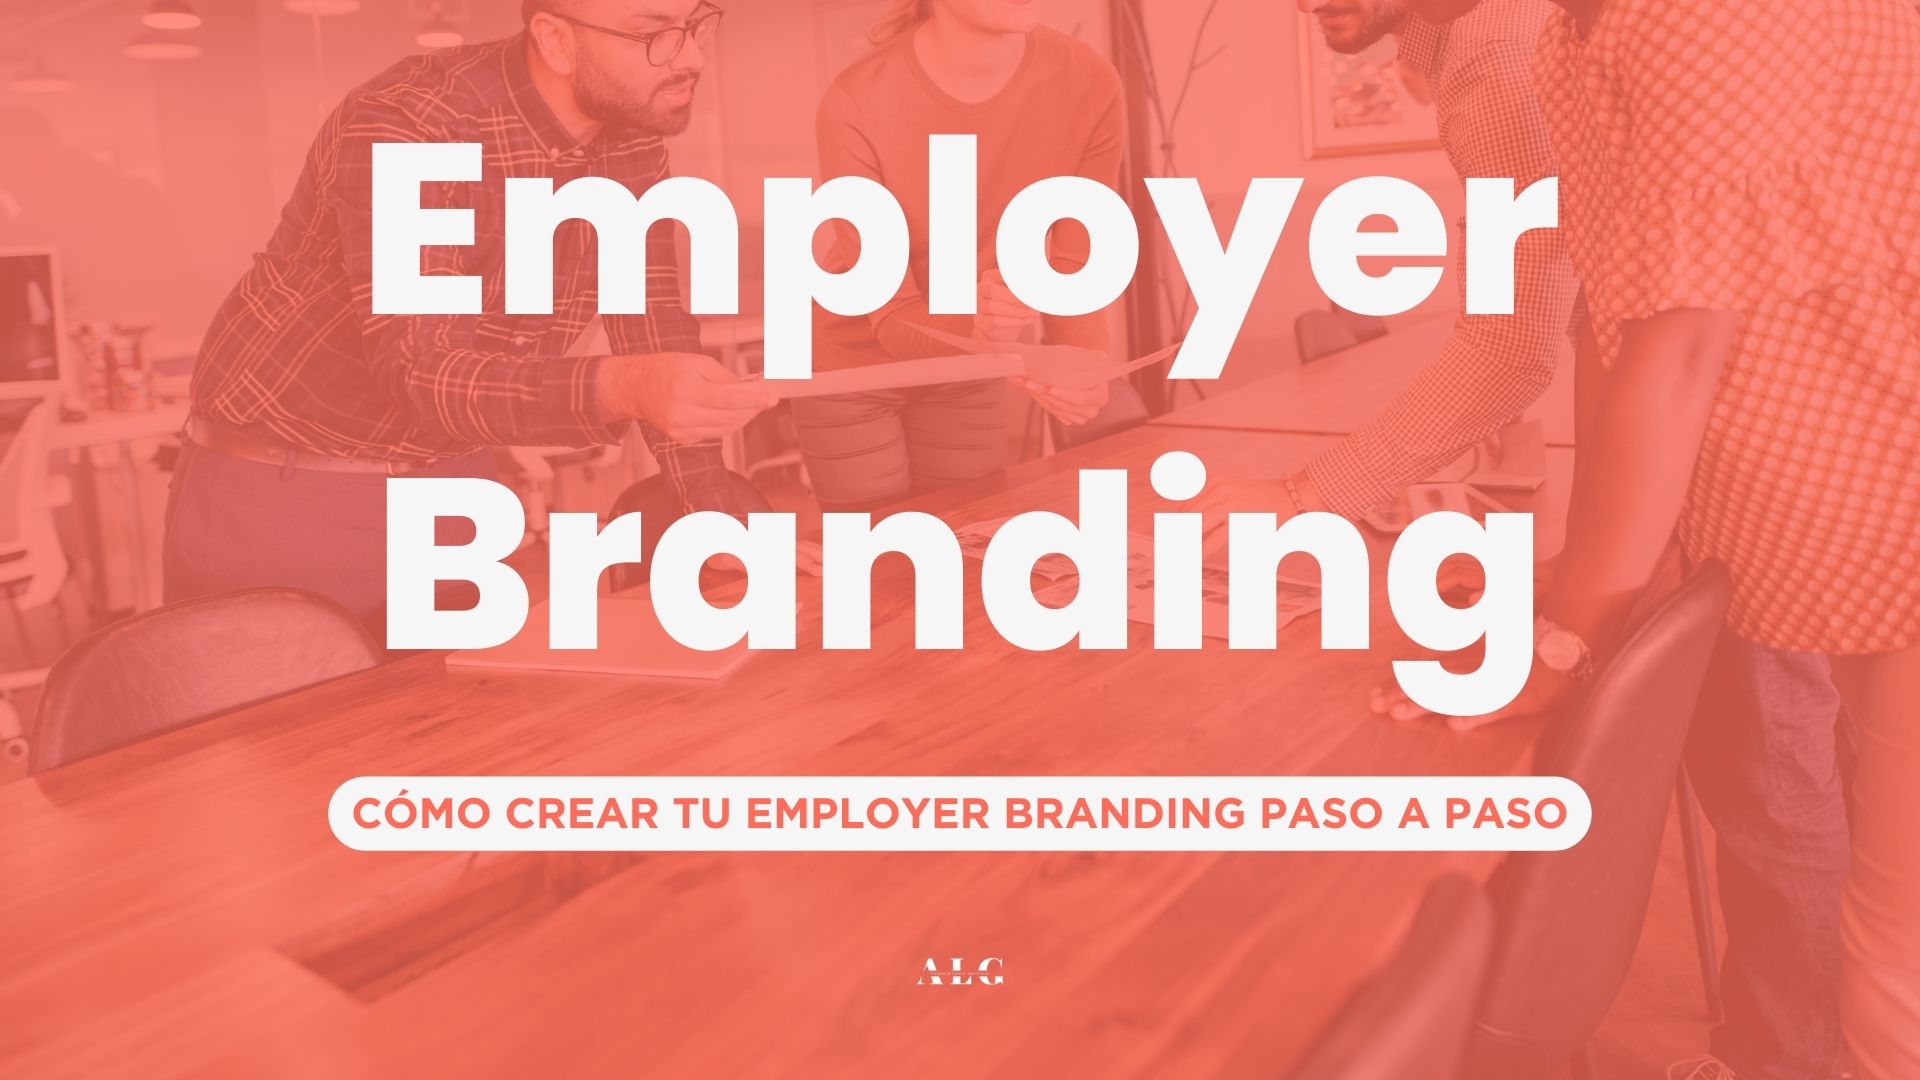 Employer Branding: Cómo crearlo paso a paso